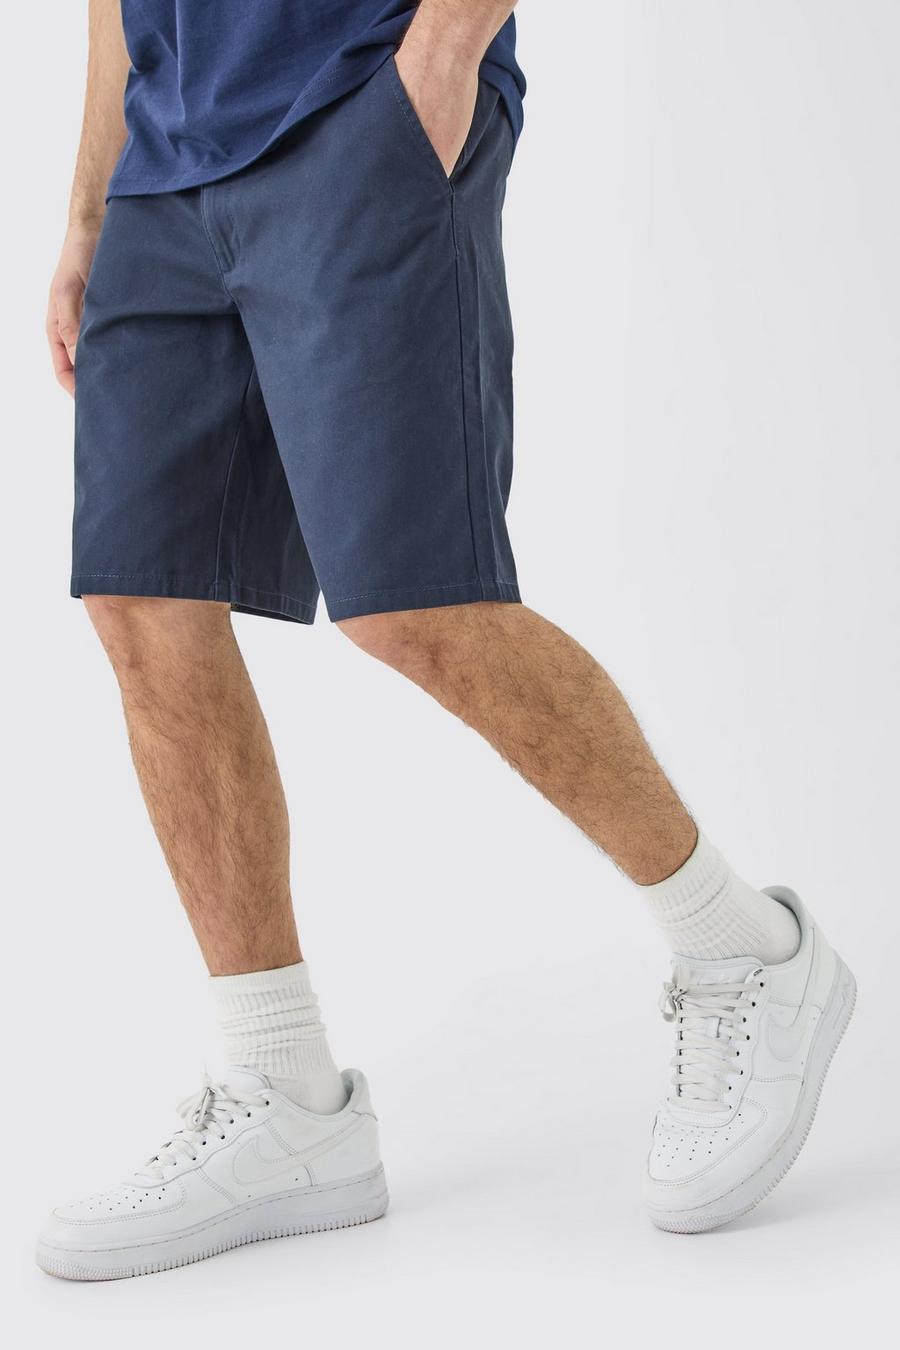 Lockere dunkelblaue Shorts, Navy image number 1